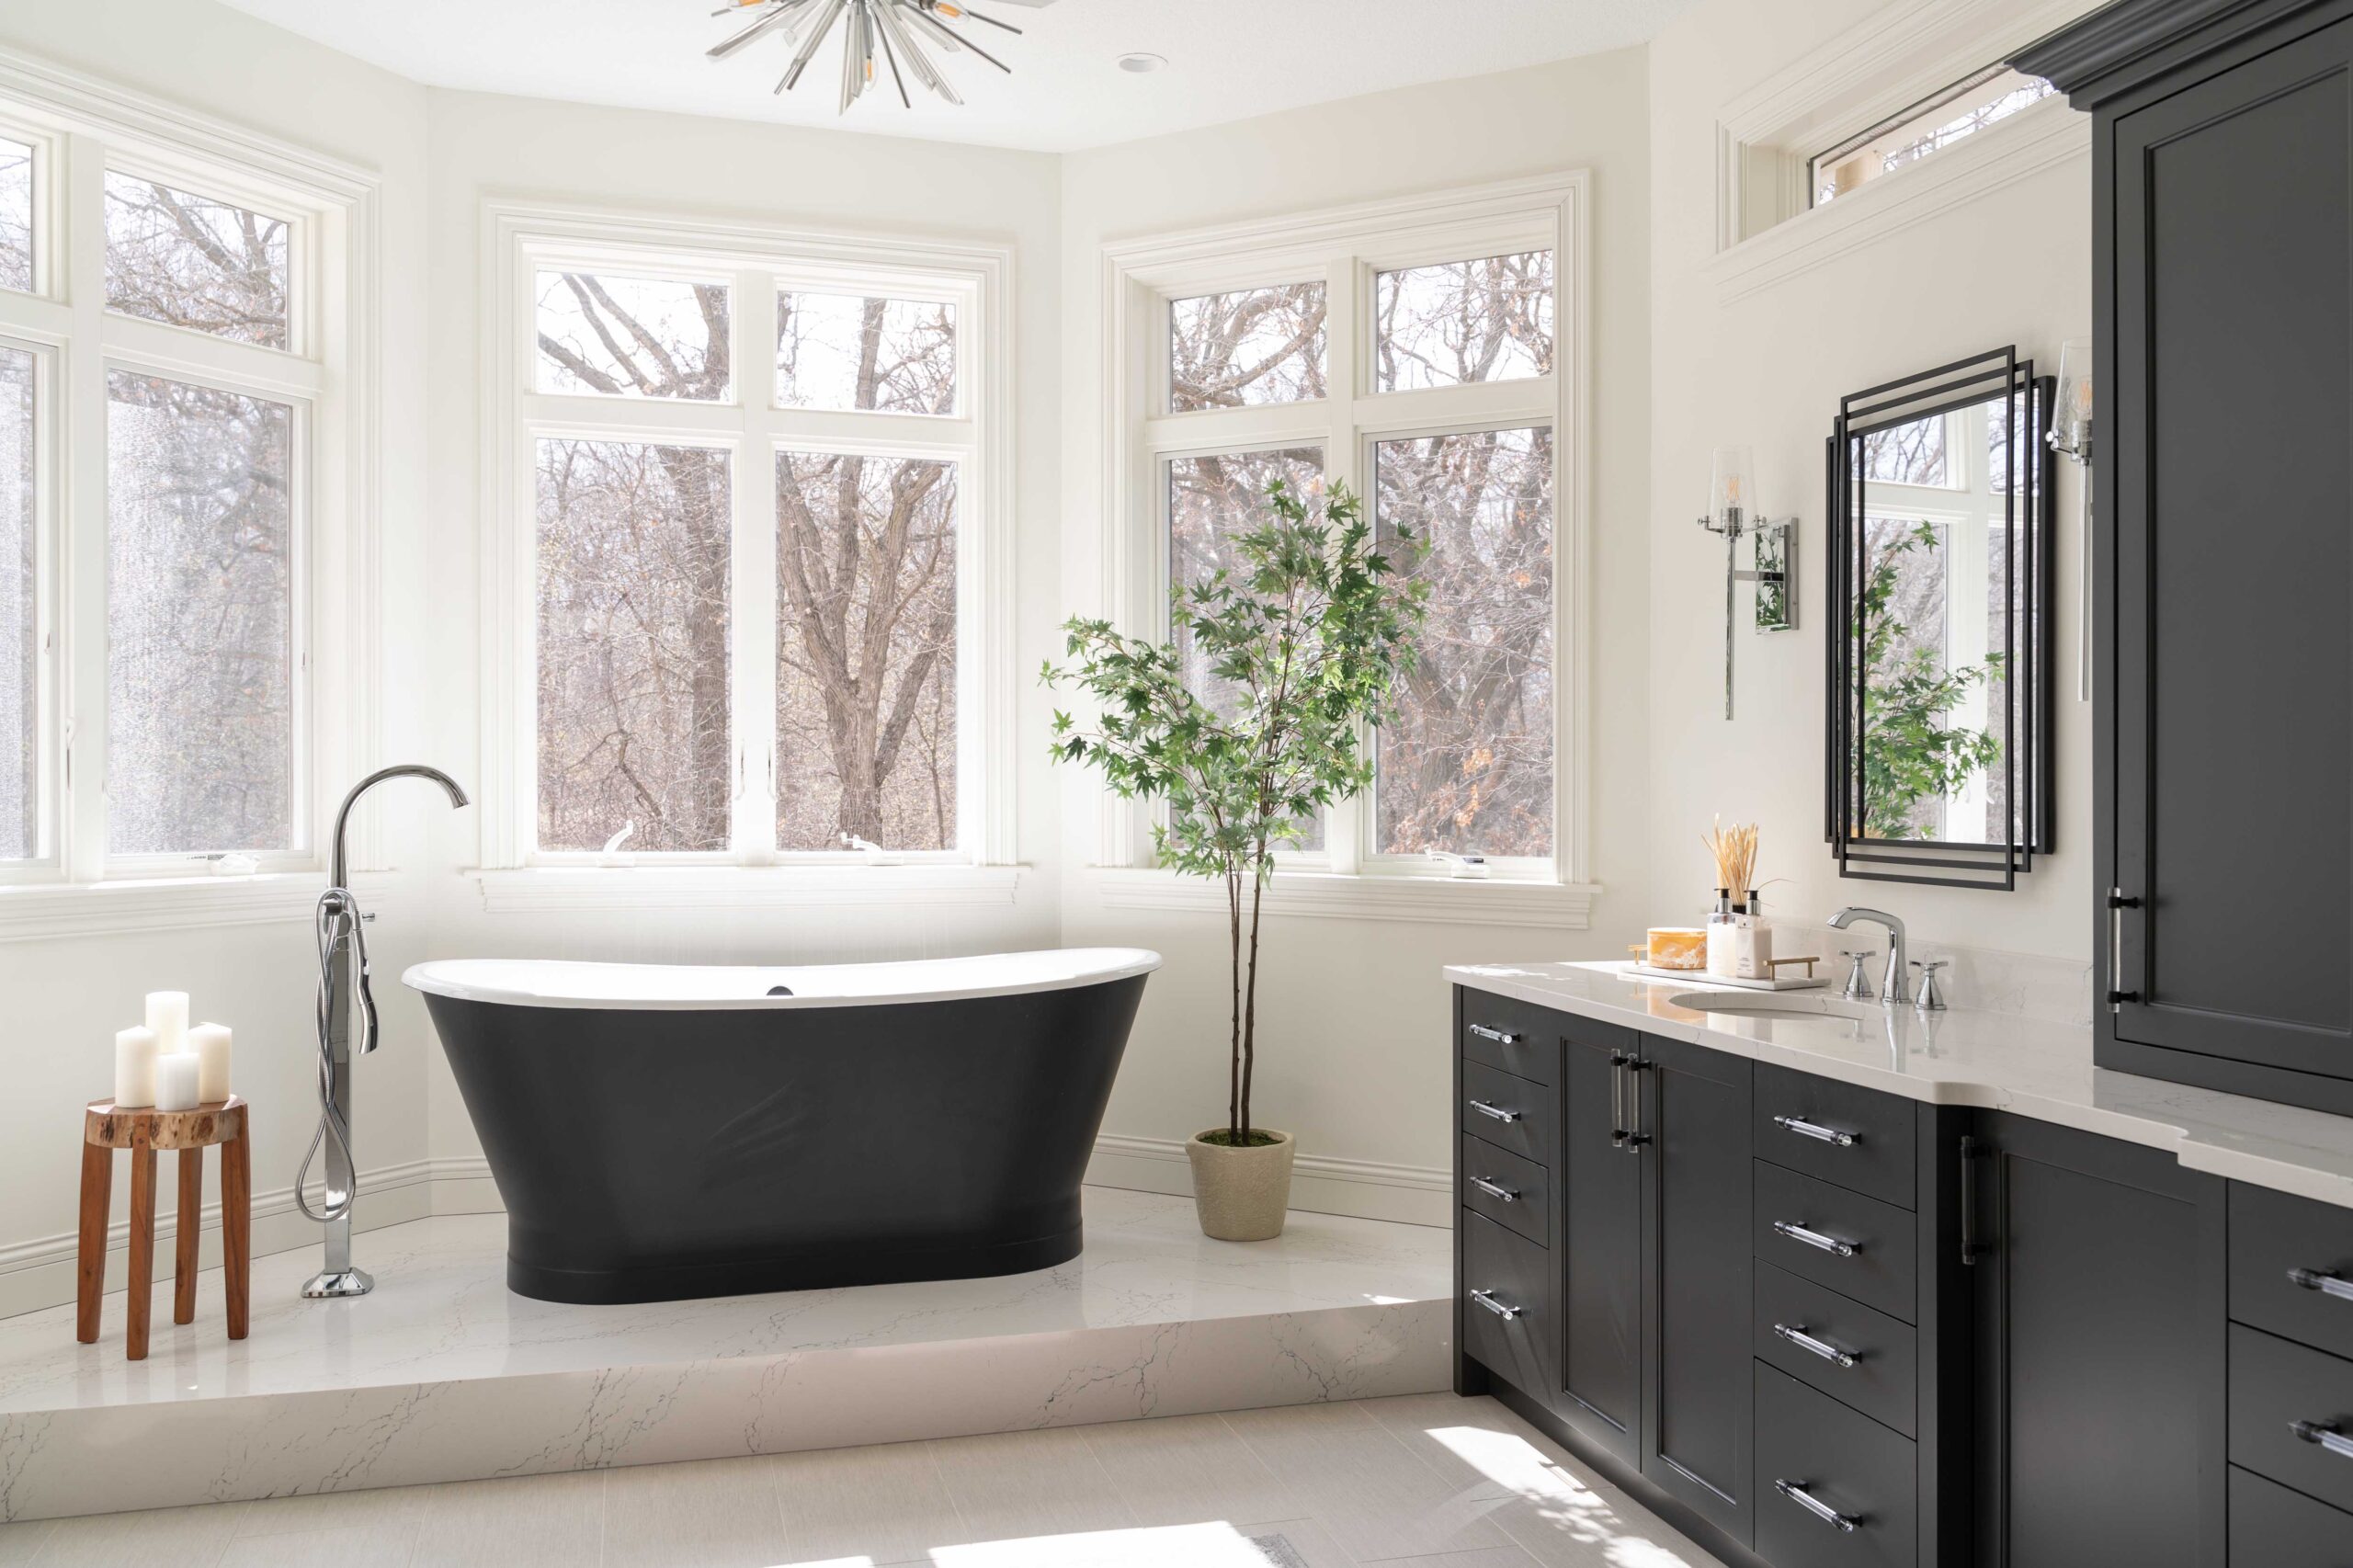 A modern bathroom remodel with sleek black cabinets and a striking black tub.